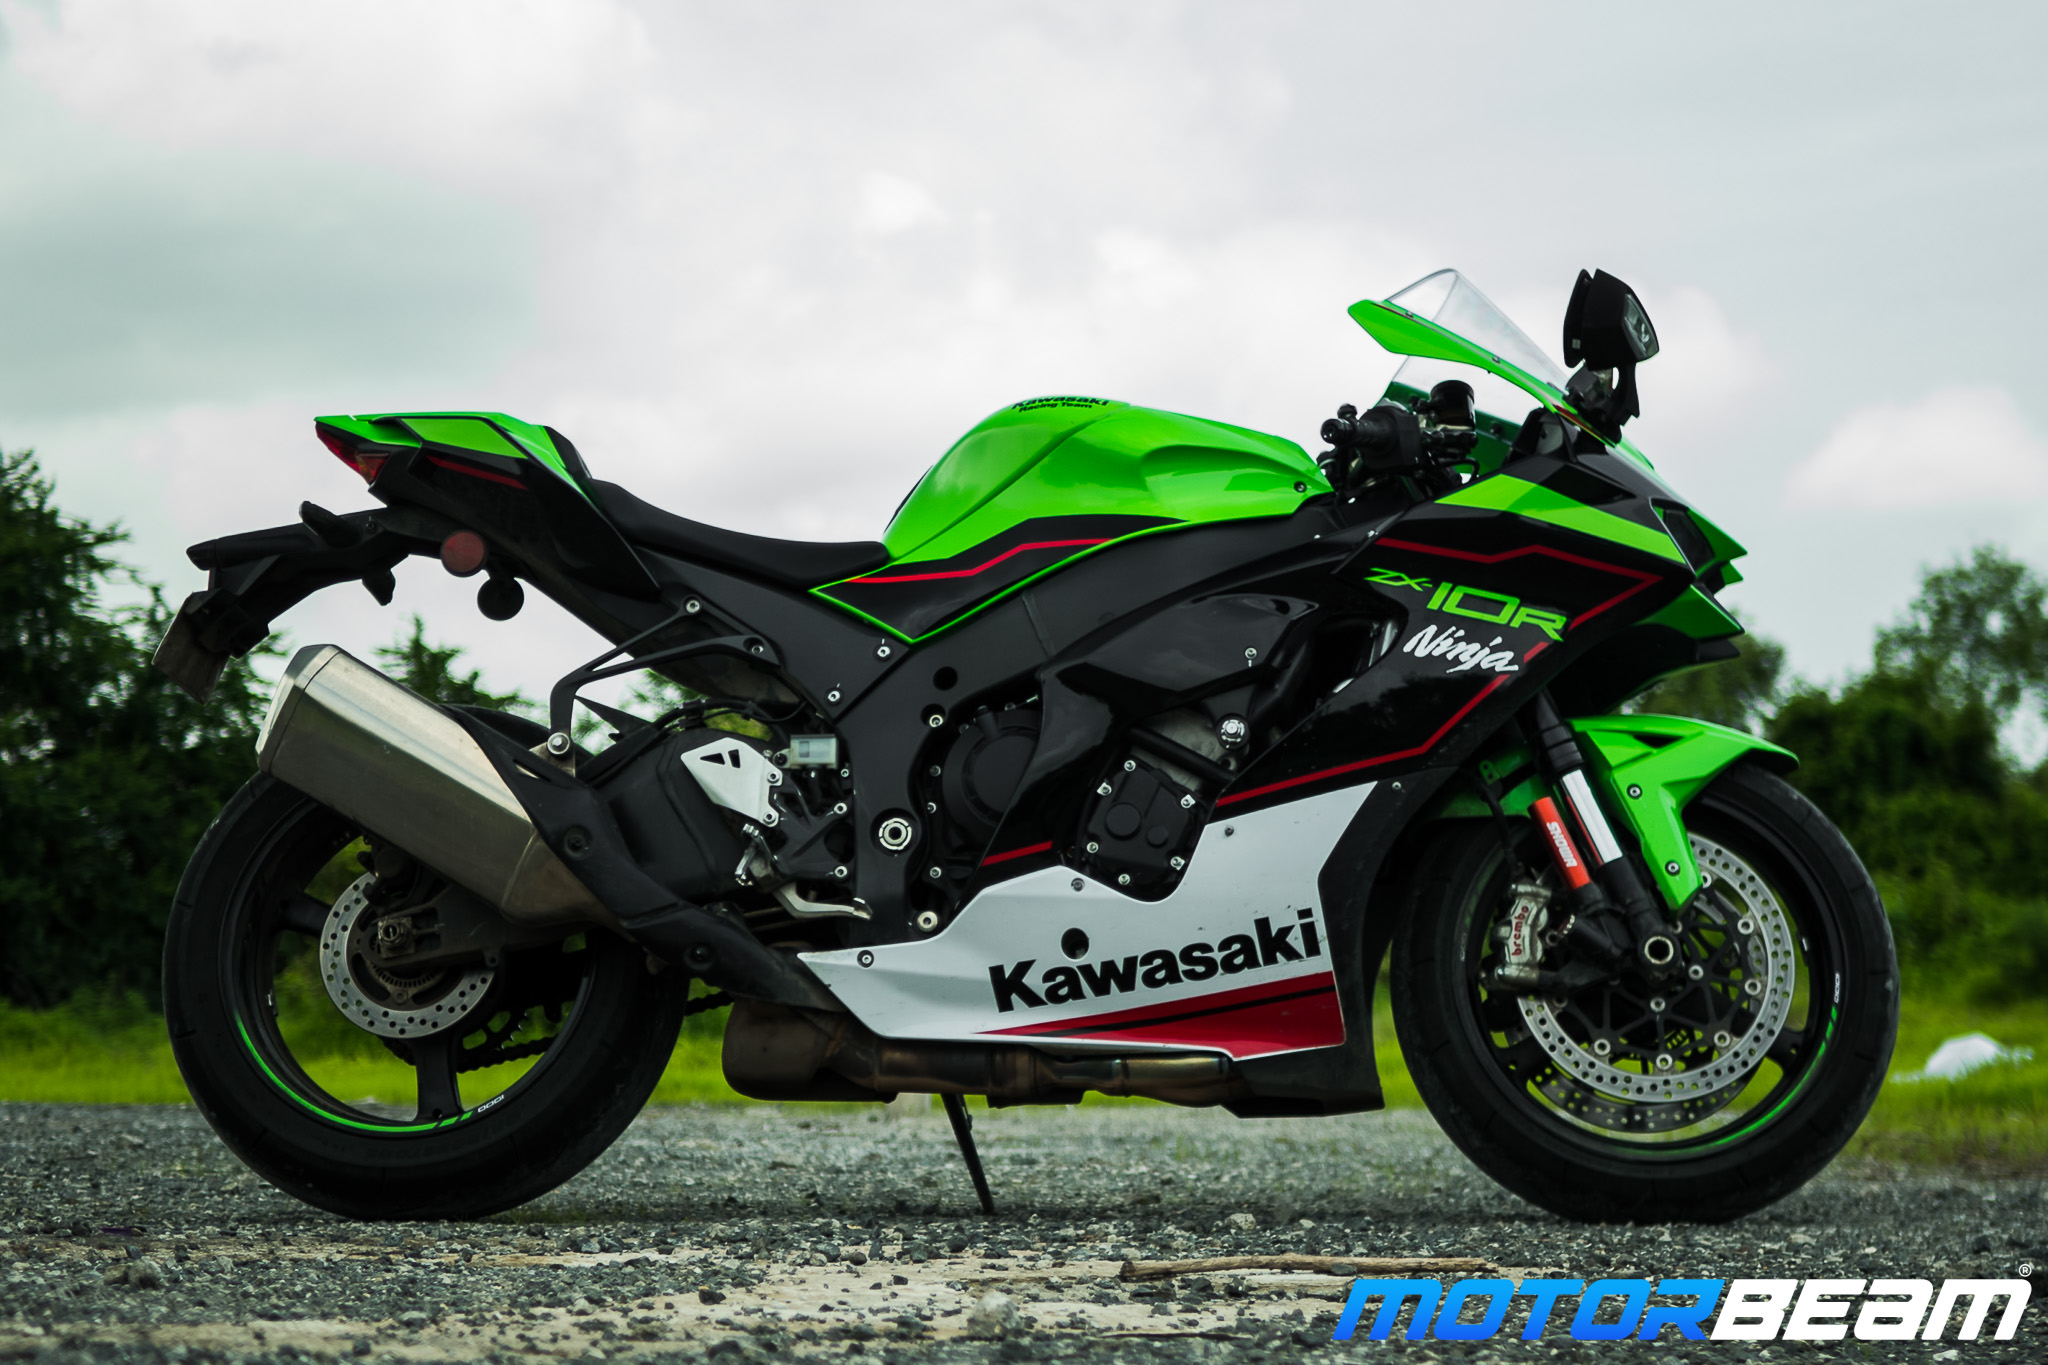 ligegyldighed Vurdering Pak at lægge 2021 Kawasaki Ninja ZX-10R Review Test Ride | MotorBeam